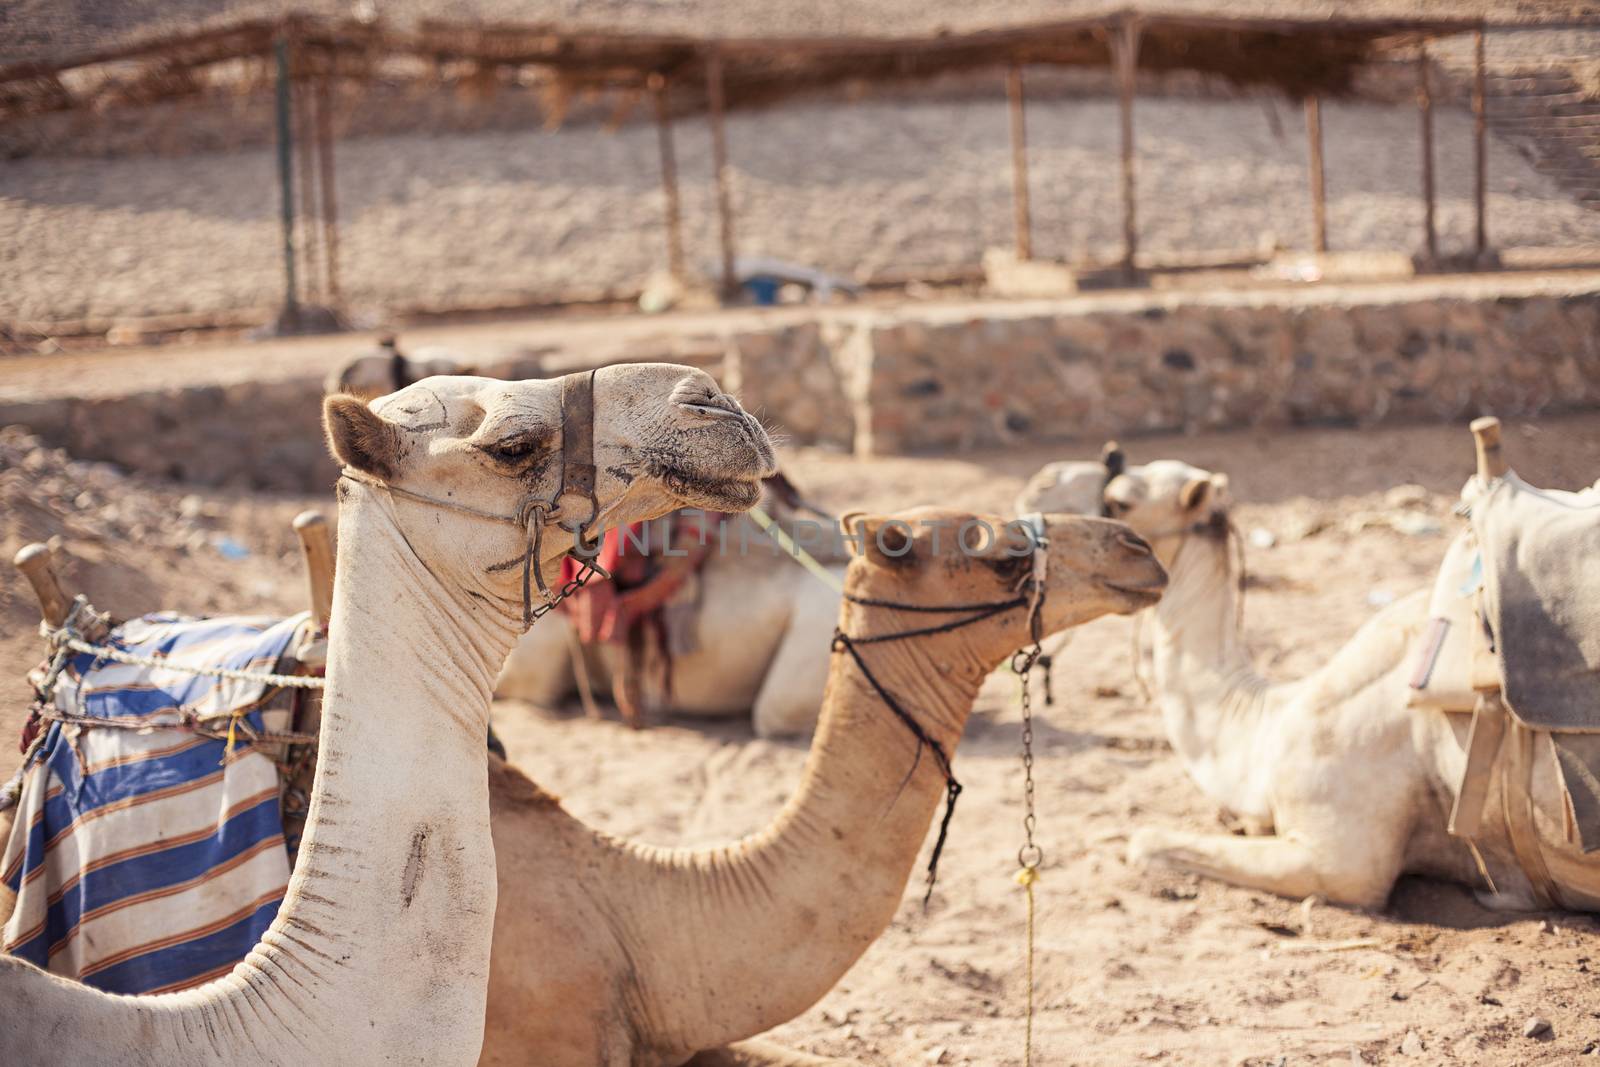 Safari trip in desert with camels in Sharm El Sheikh Egypt